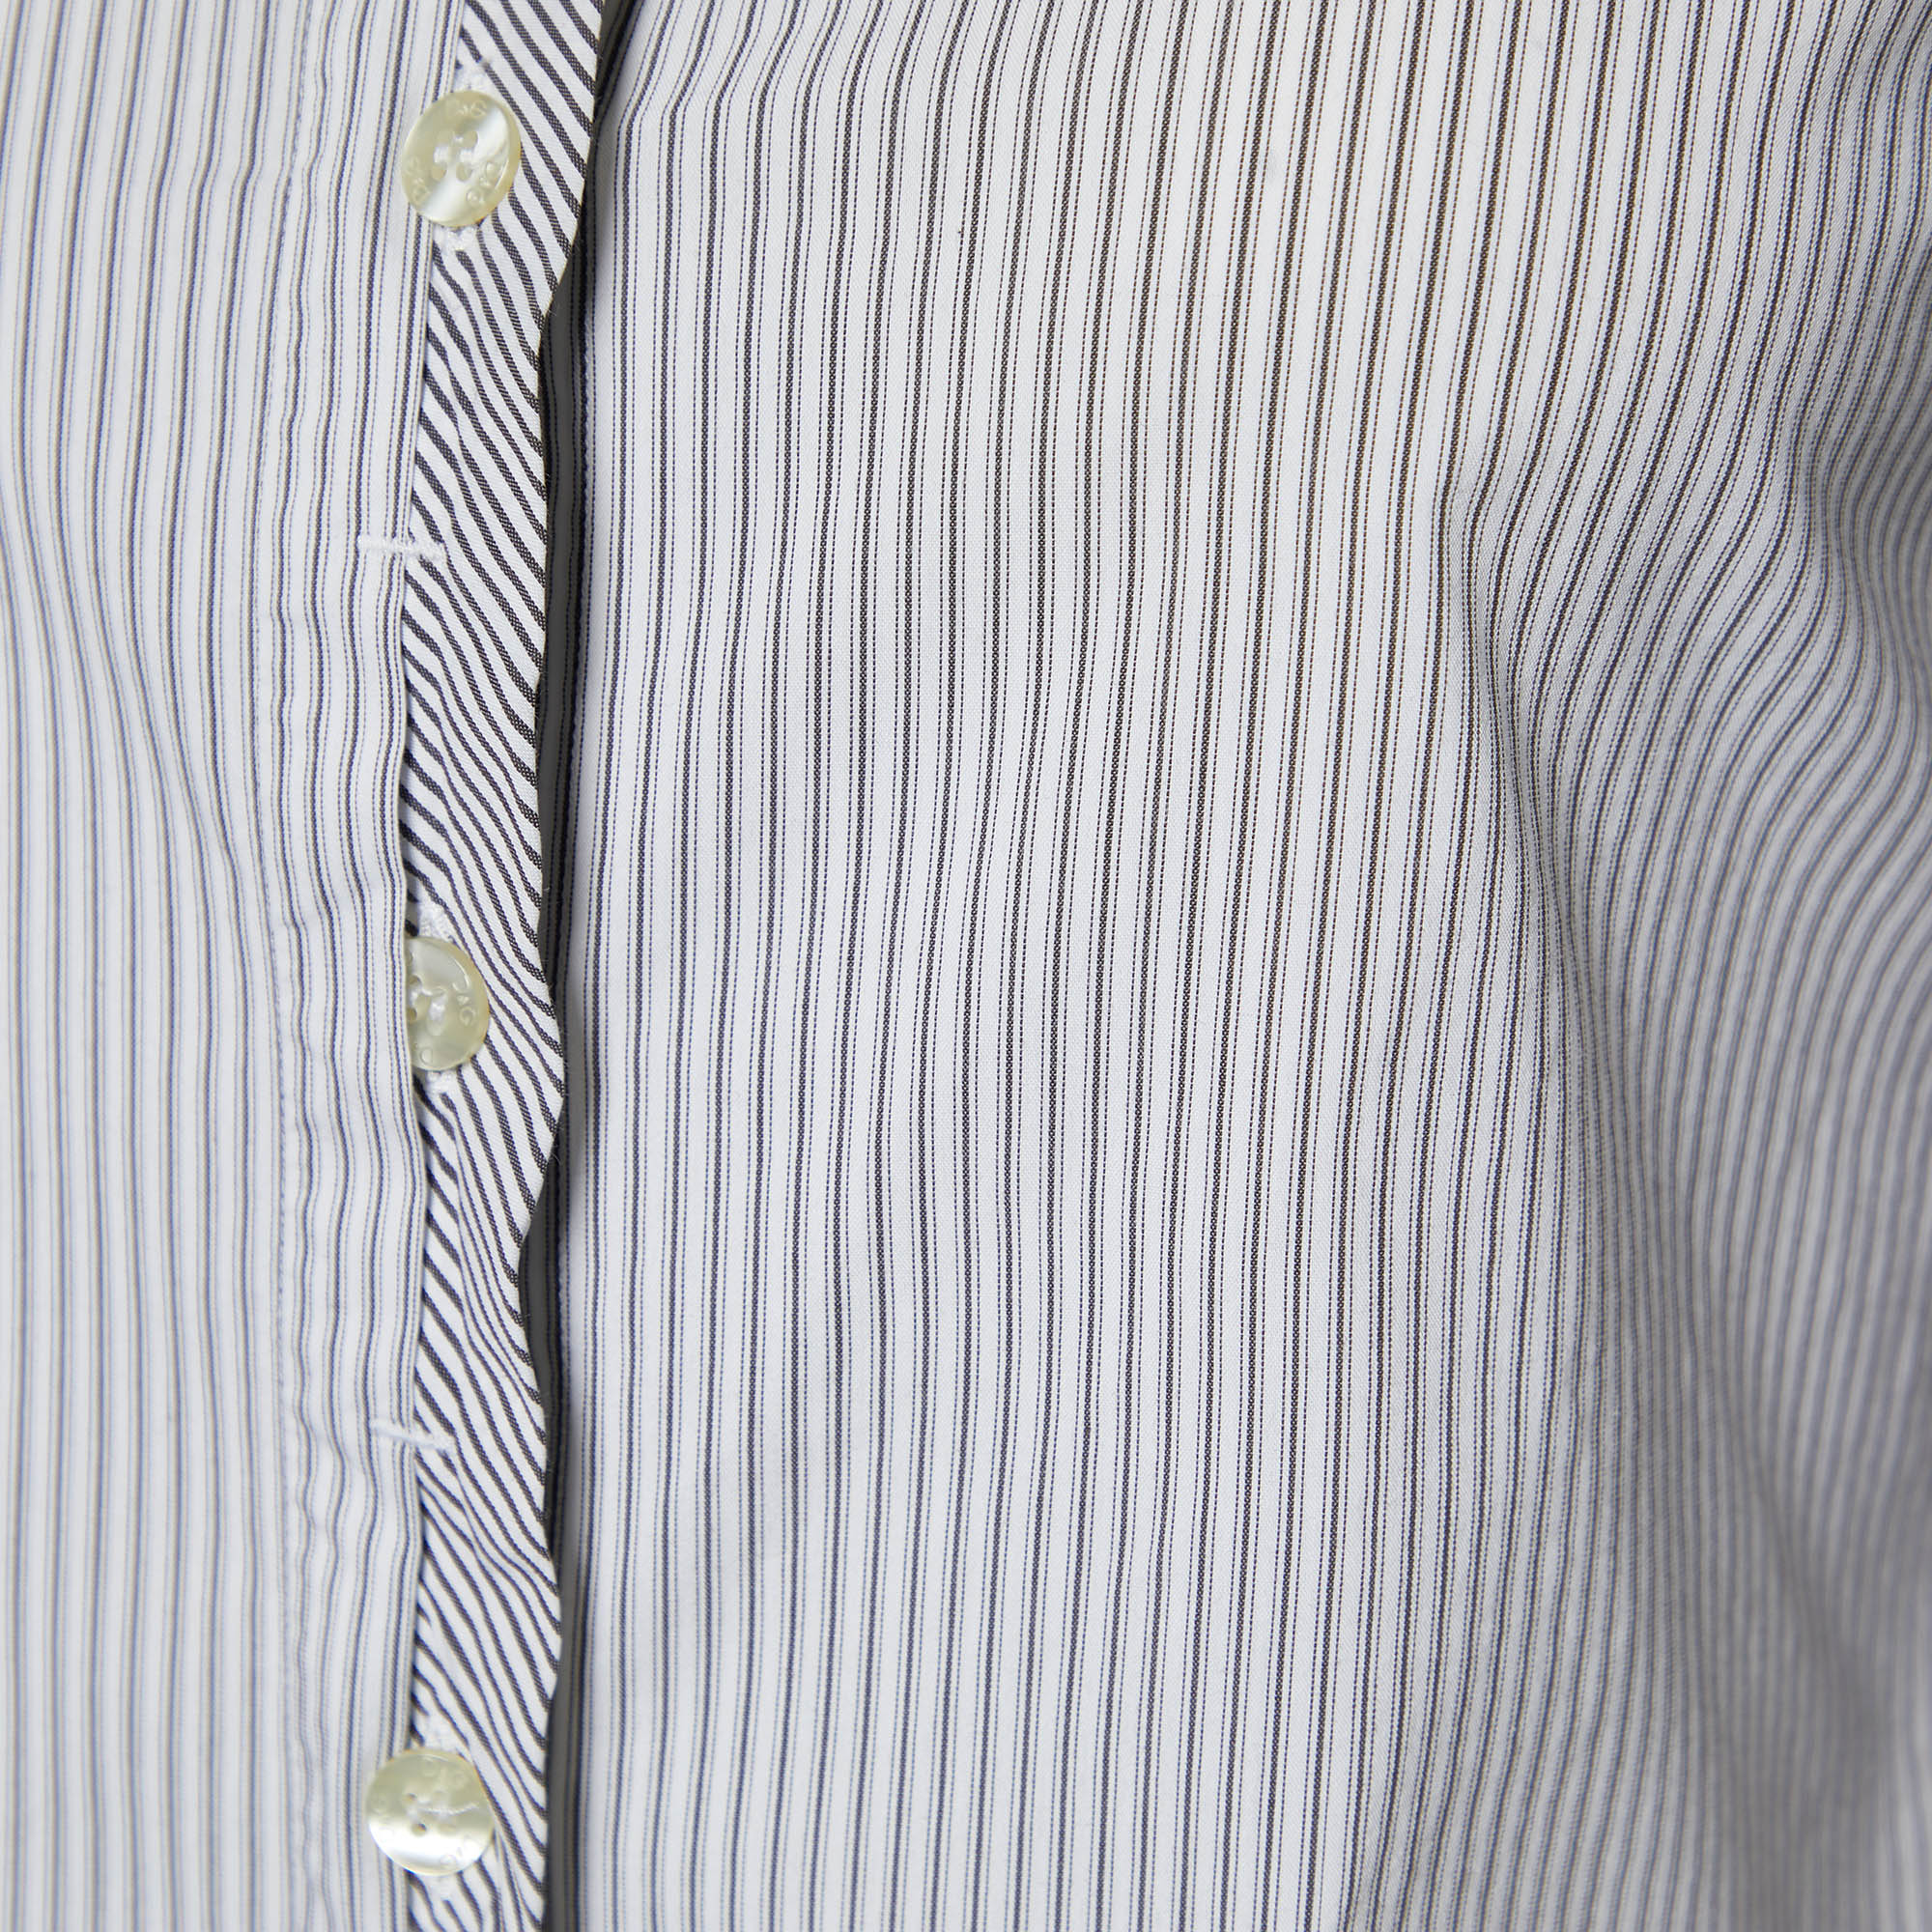 D&G White & Grey Striped Cotton Long Sleeve Shirt S